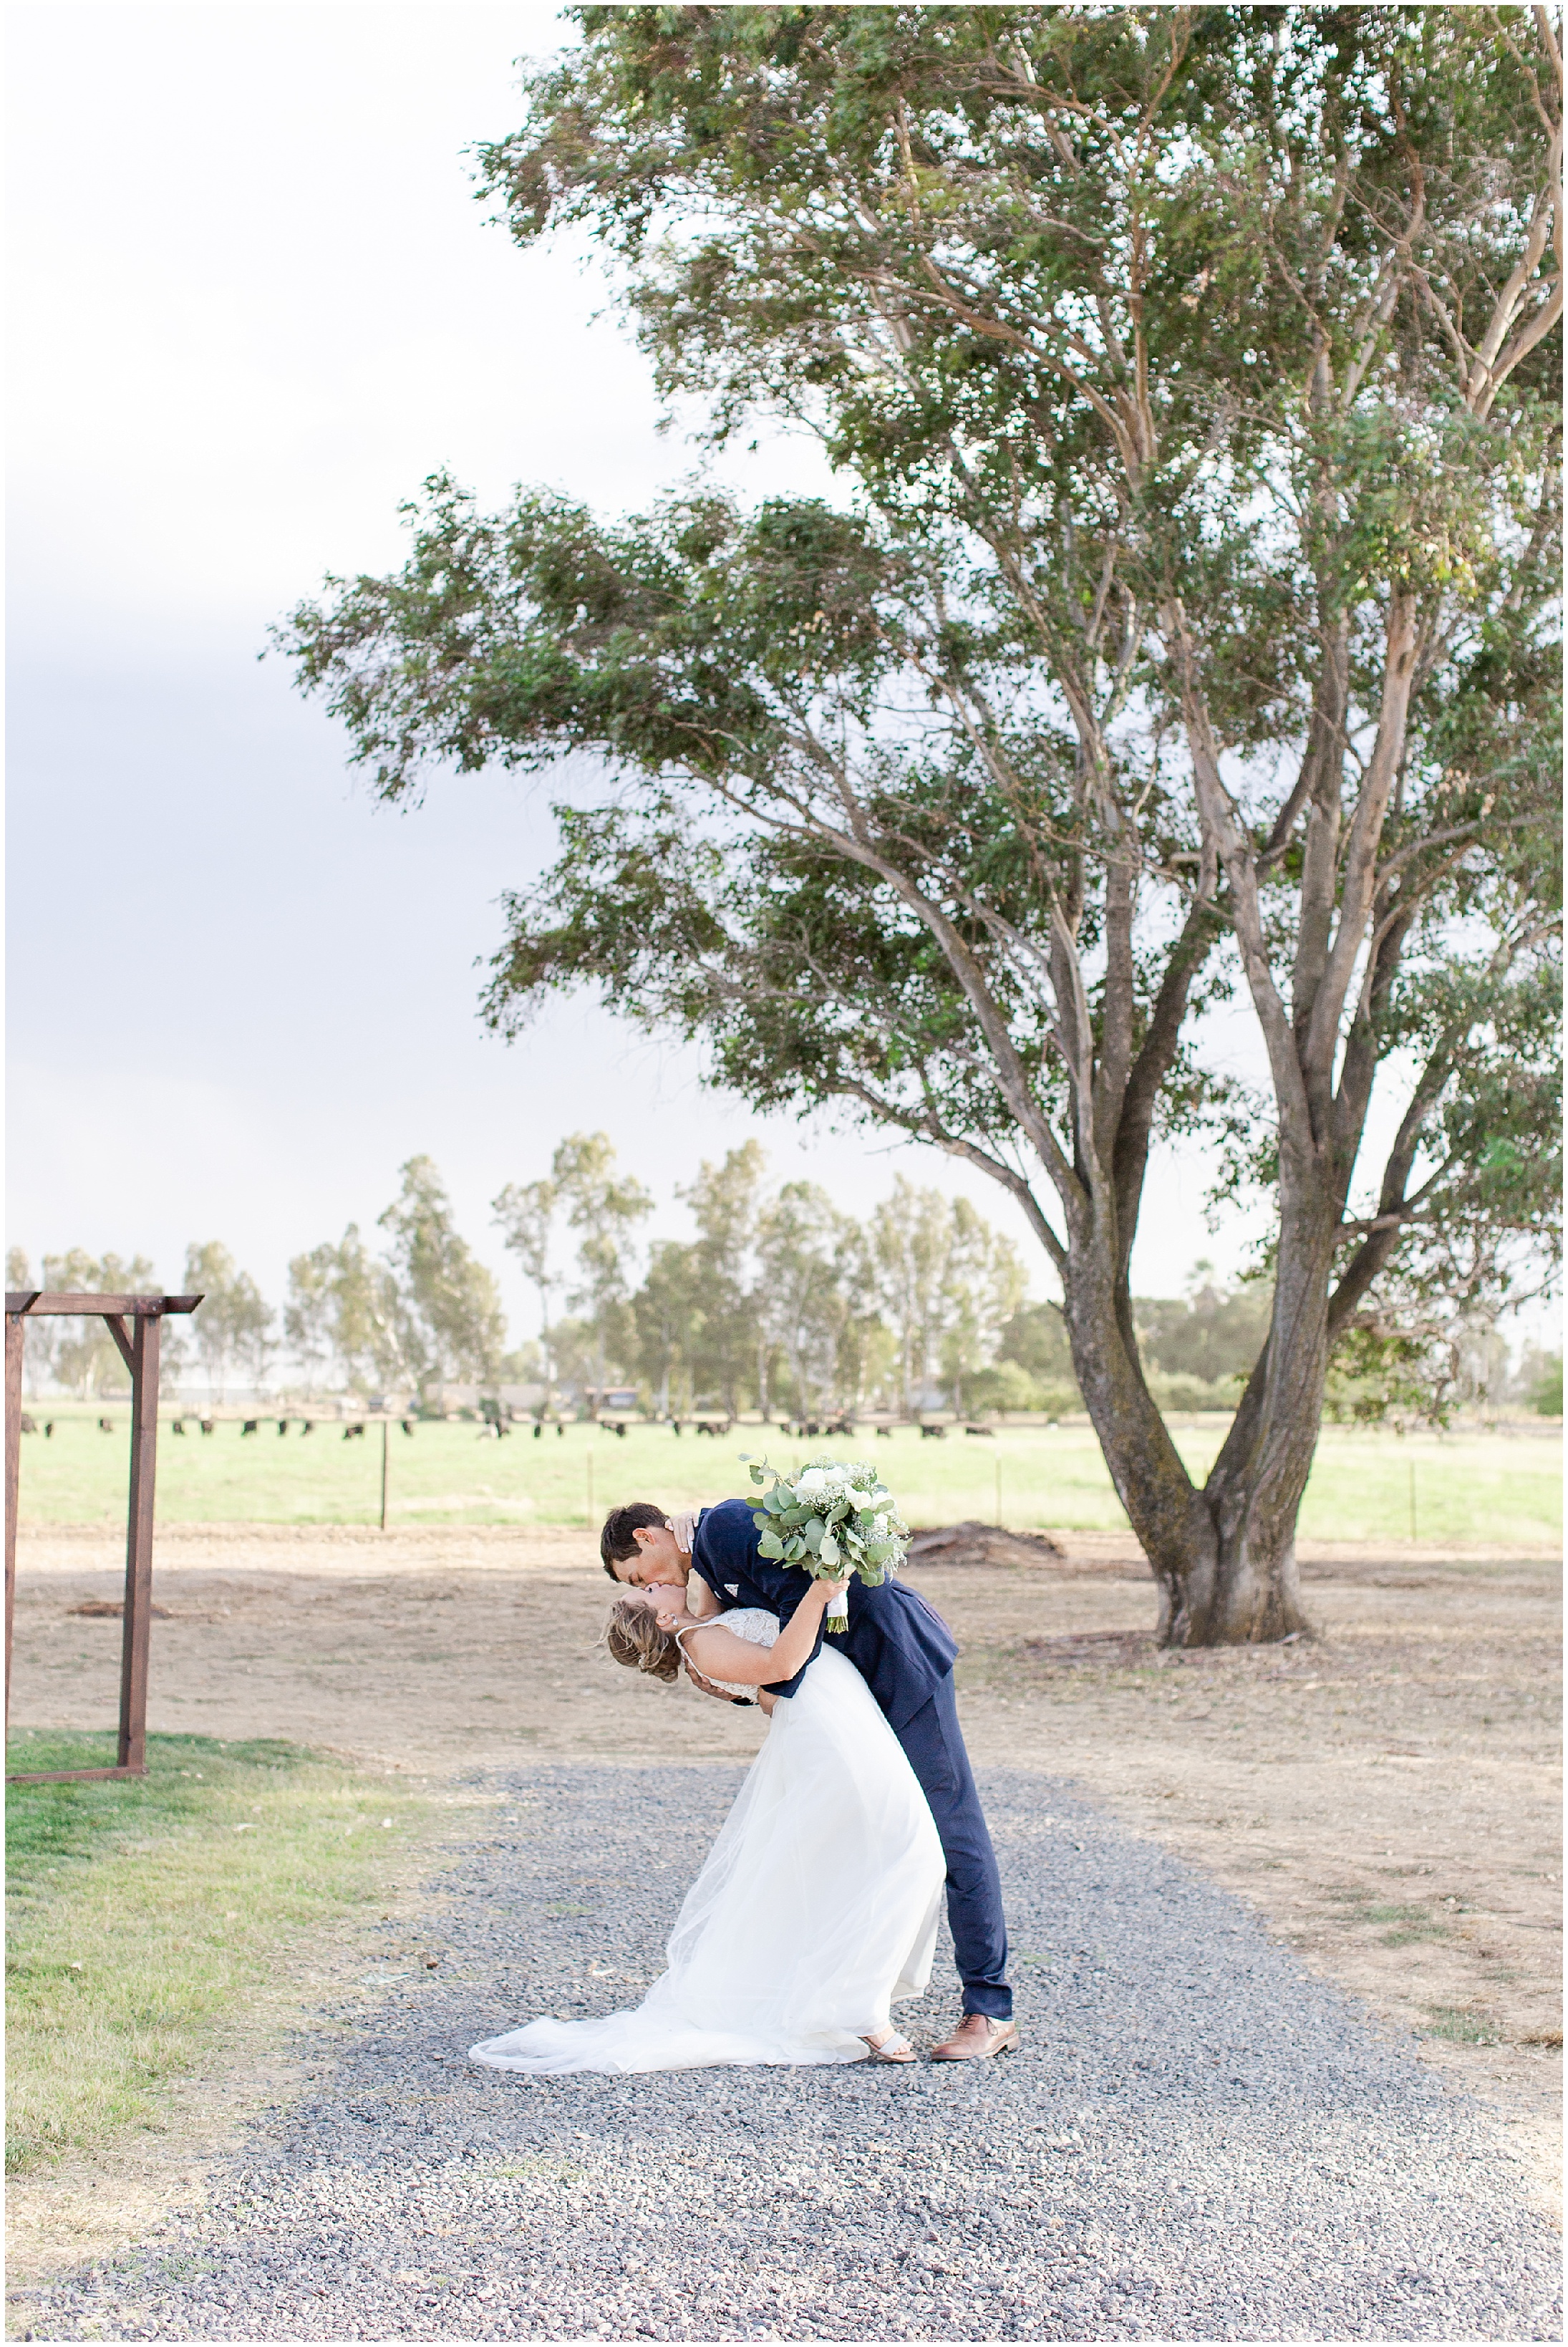 Fall Country Wedding with Tree | Karah and Dan Wedding